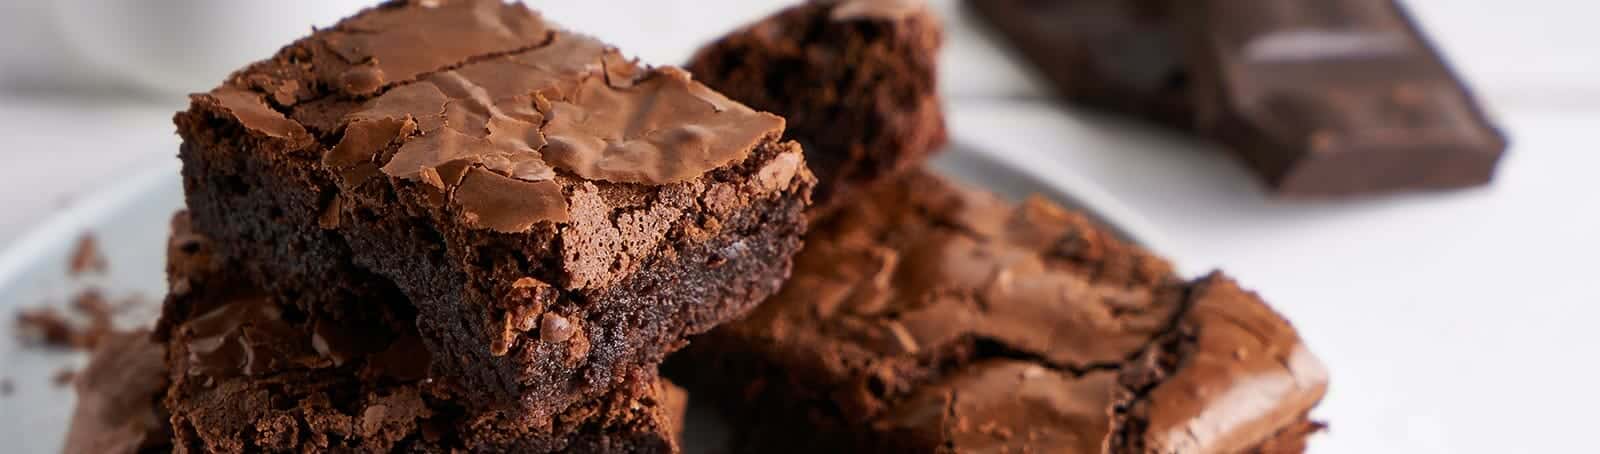 Potente Hash-Brownies backen – das Rezept